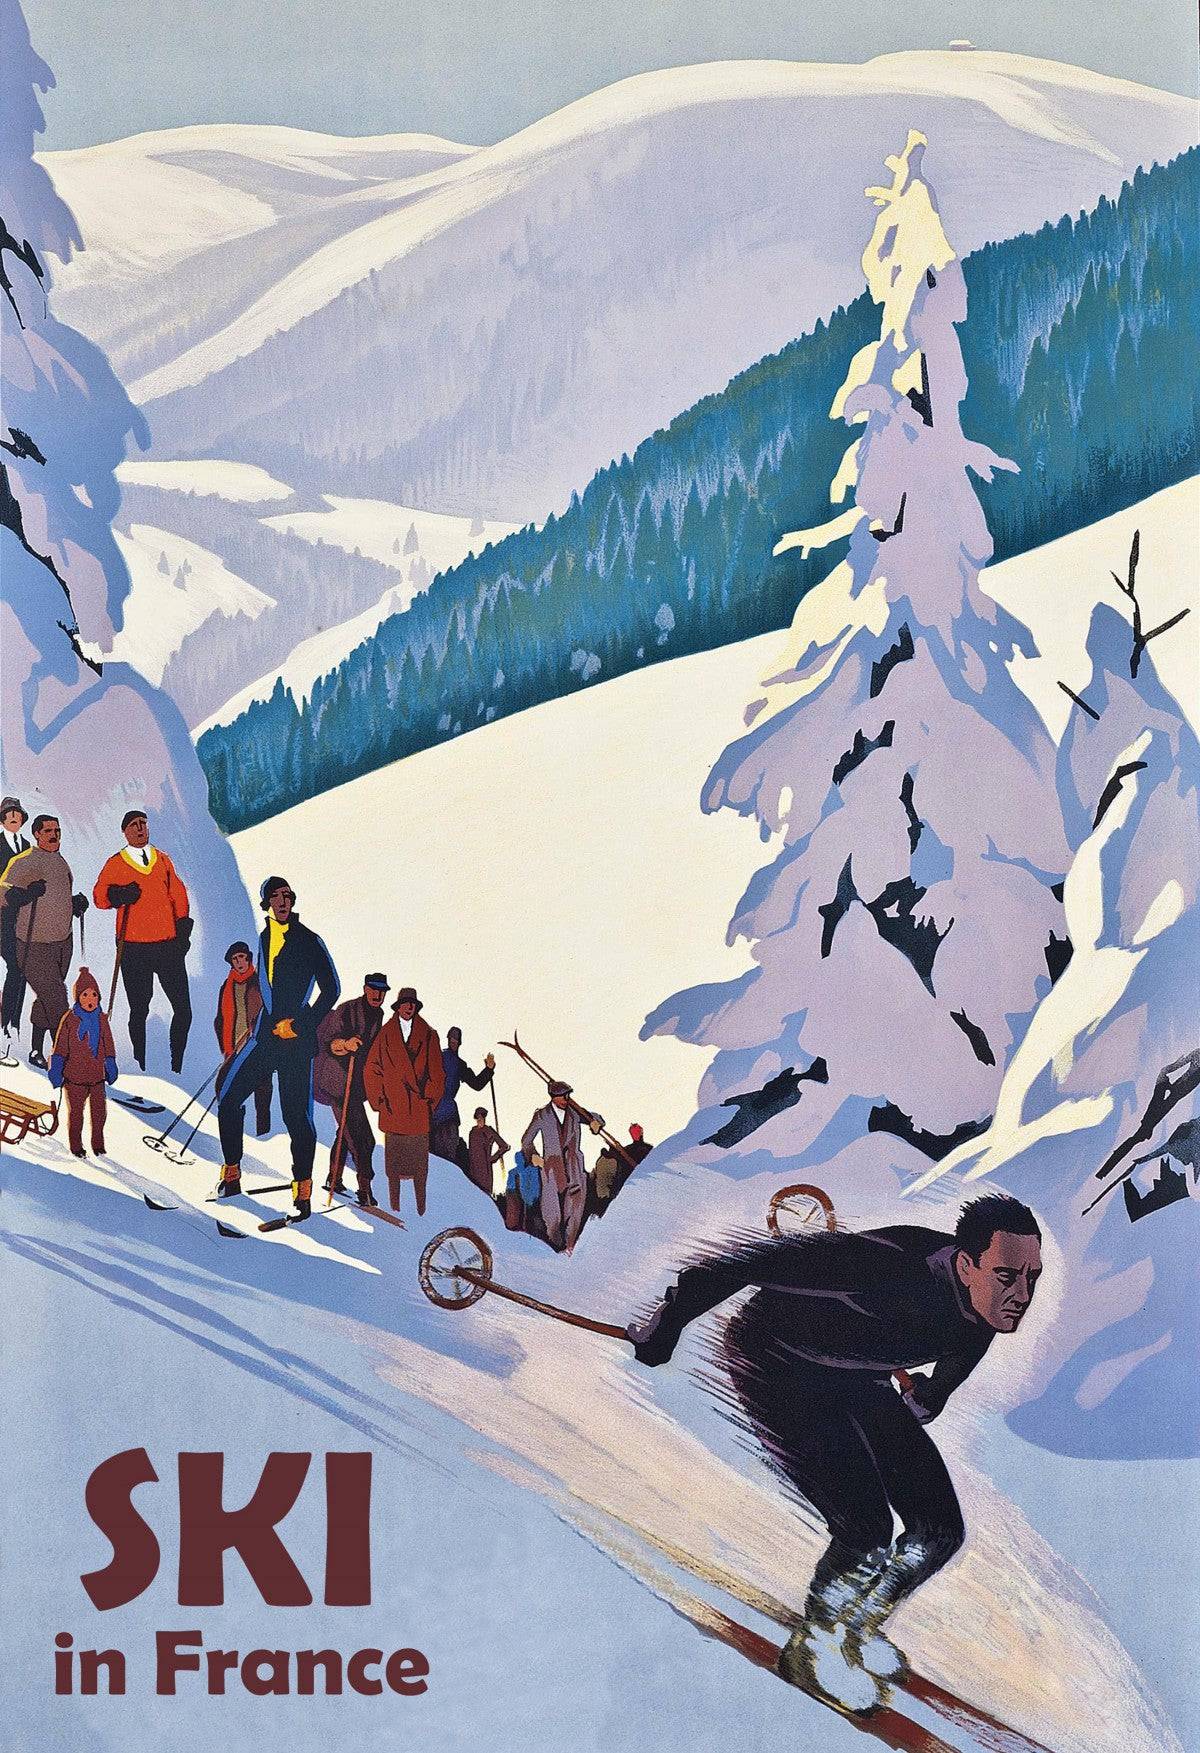 Skiing in France - Powderaddicts